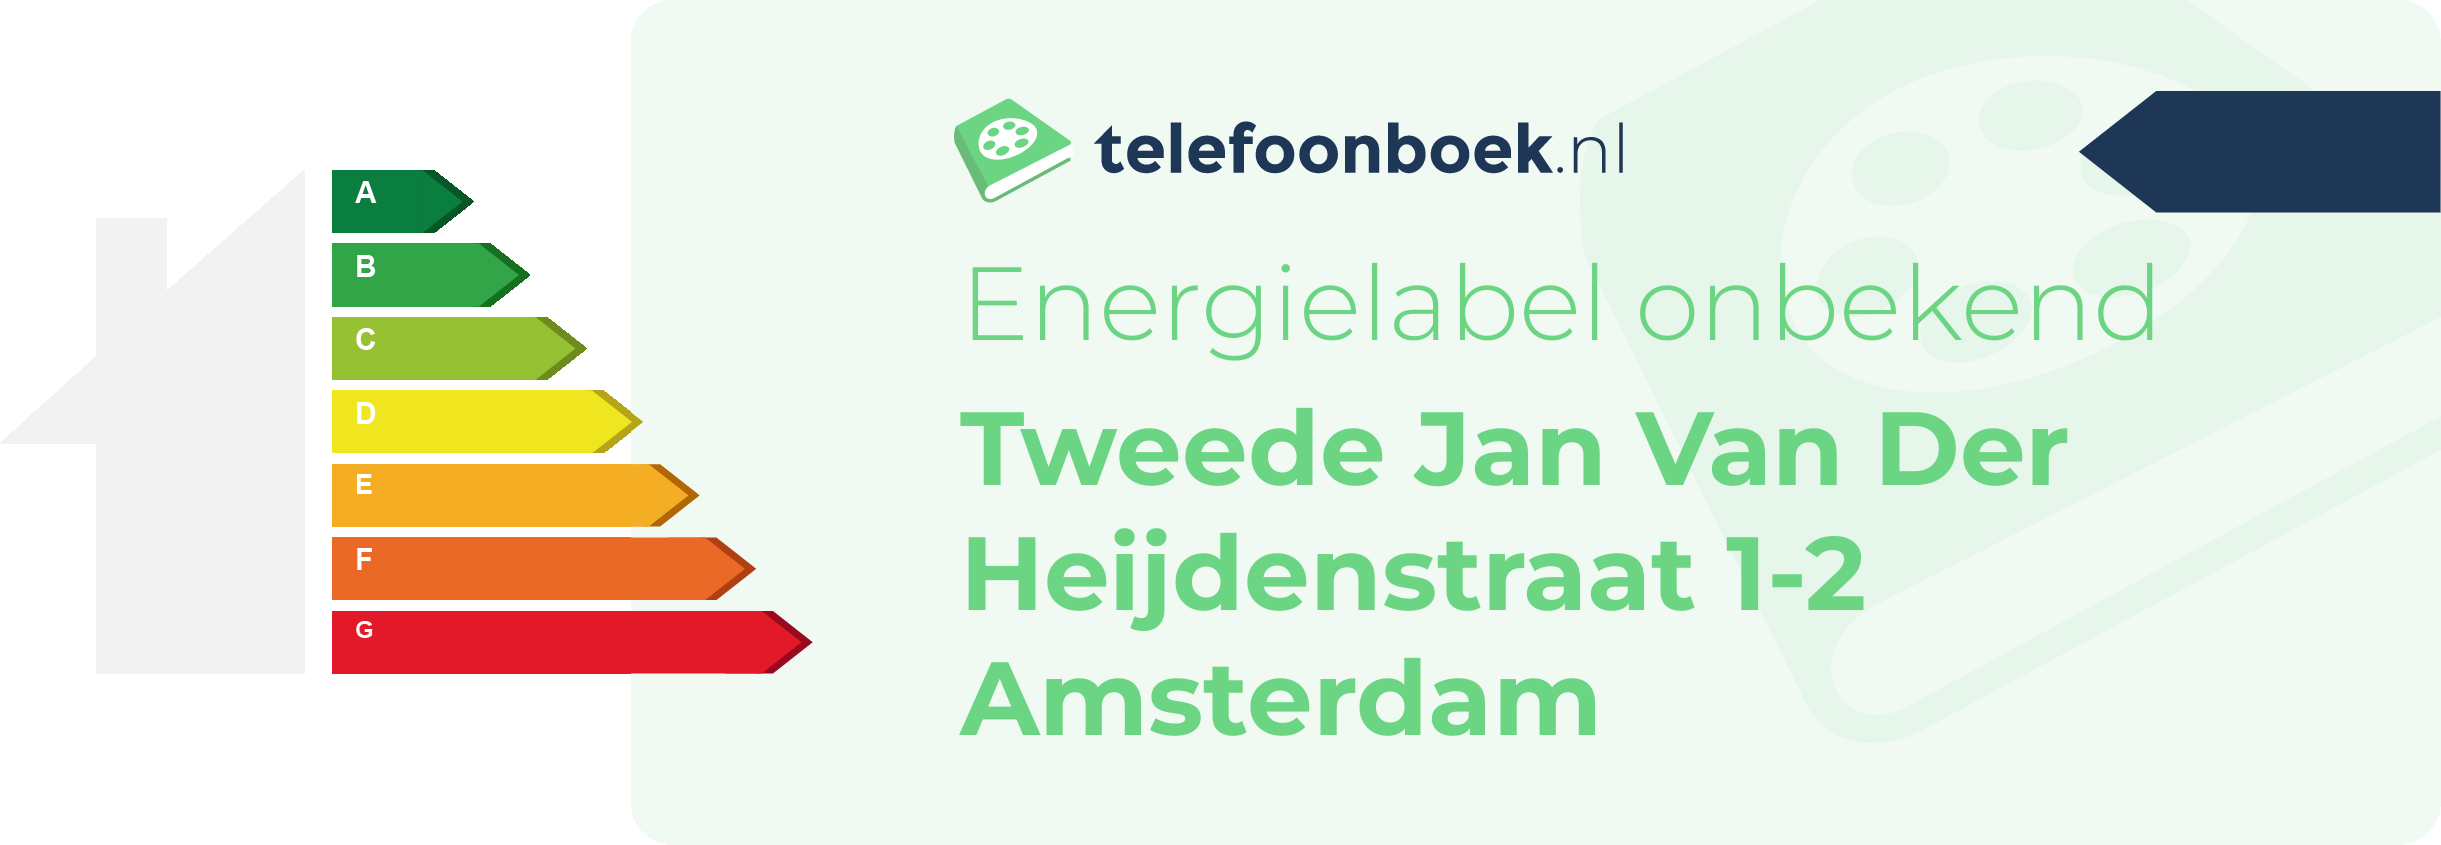 Energielabel Tweede Jan Van Der Heijdenstraat 1-2 Amsterdam